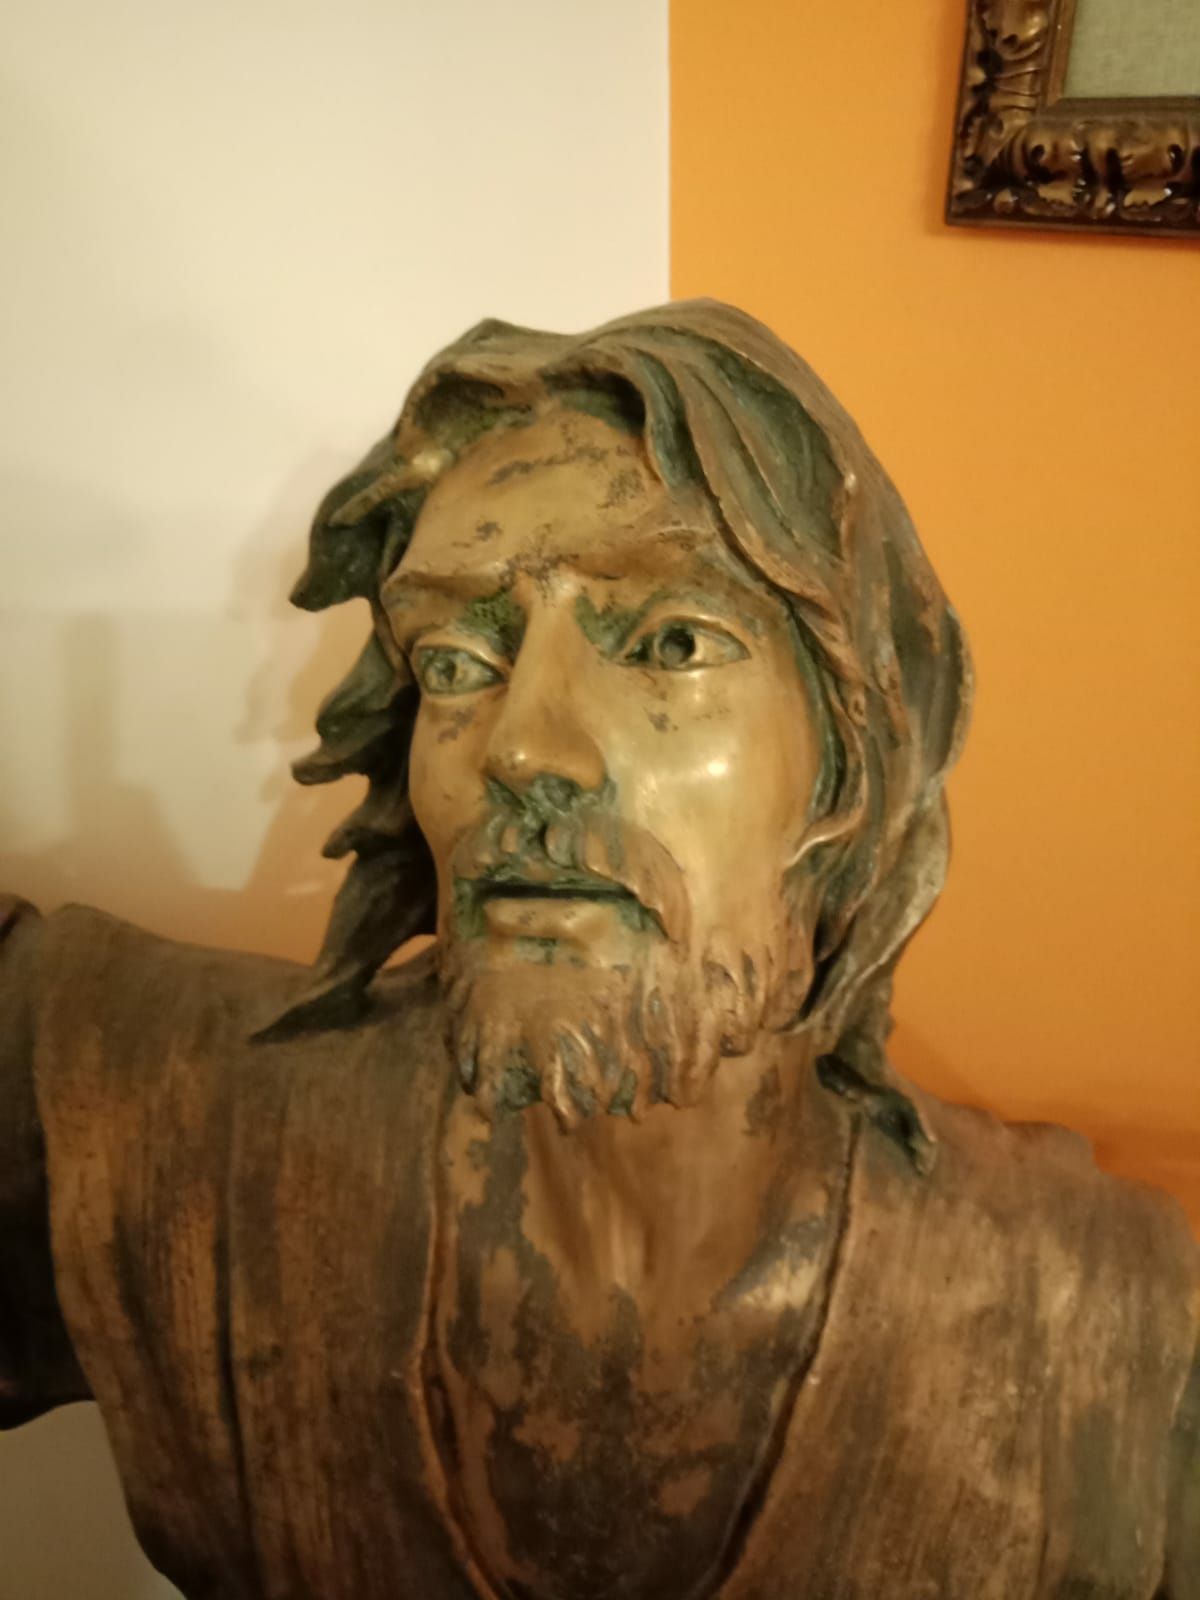 Vand statuie de bronz, Isus Hristos